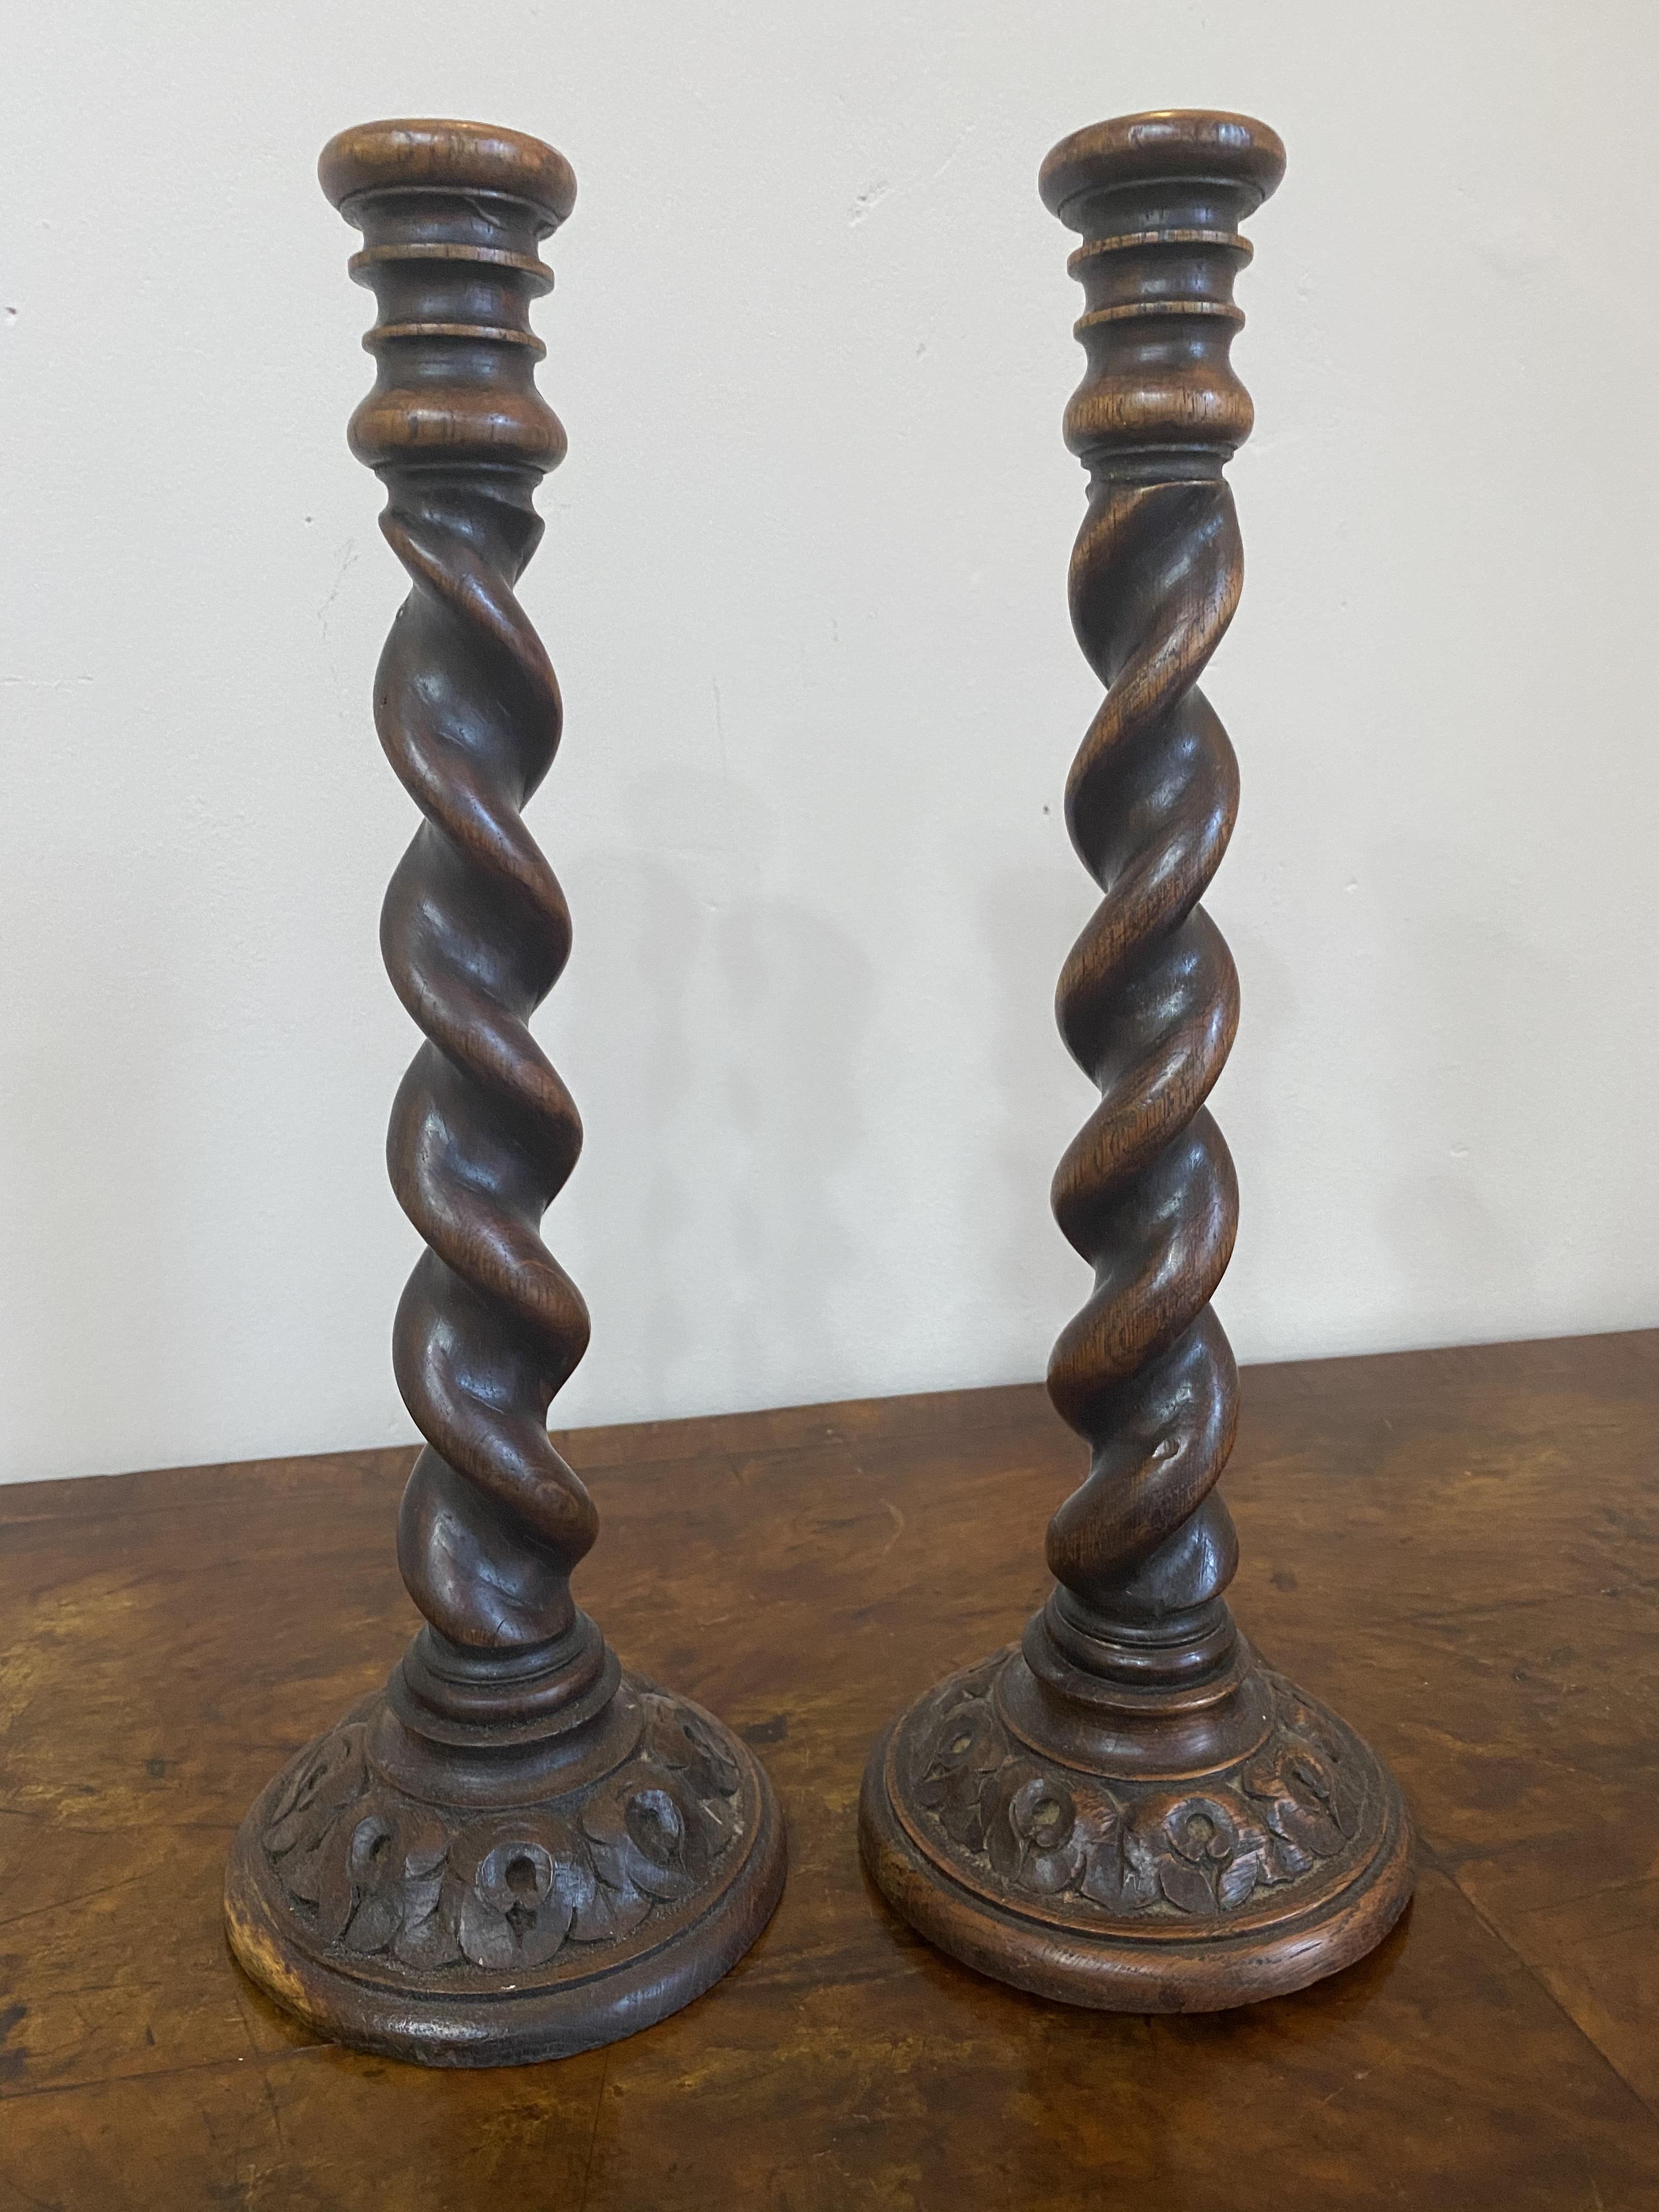 Pair of carved barley twist candlesticks